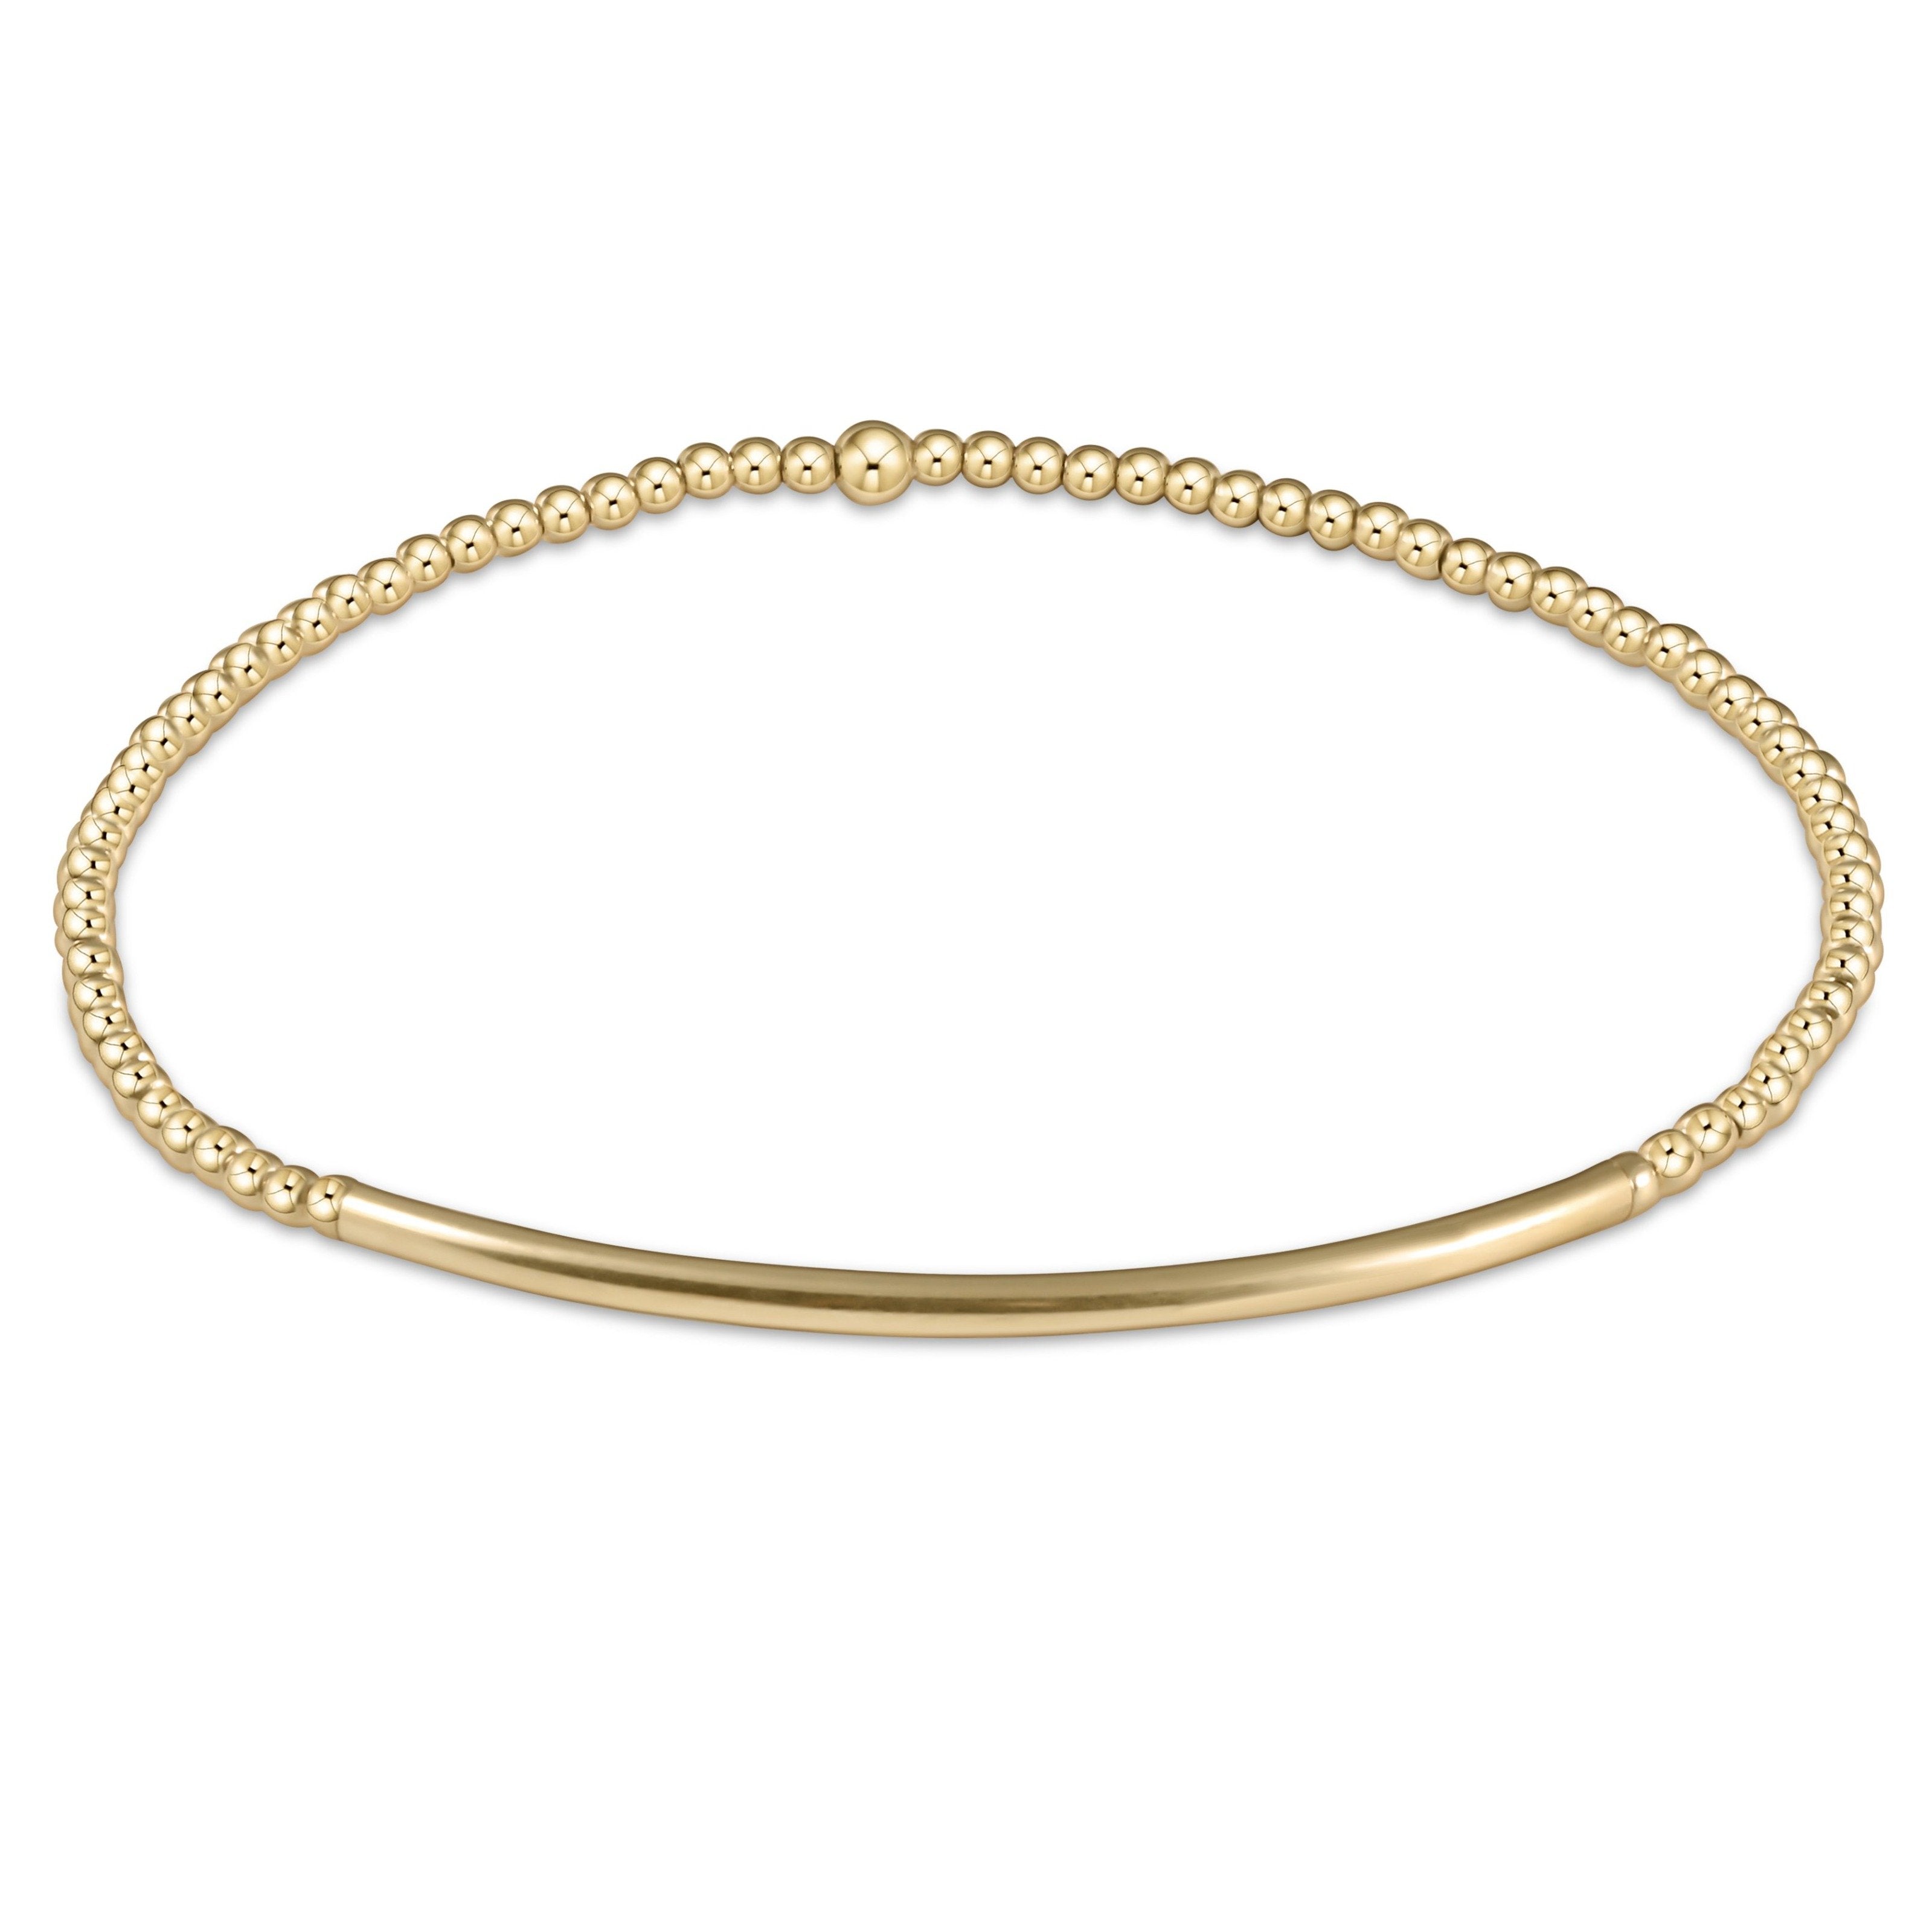 egirl classic gold 2mm bead bracelet - bliss bar gold